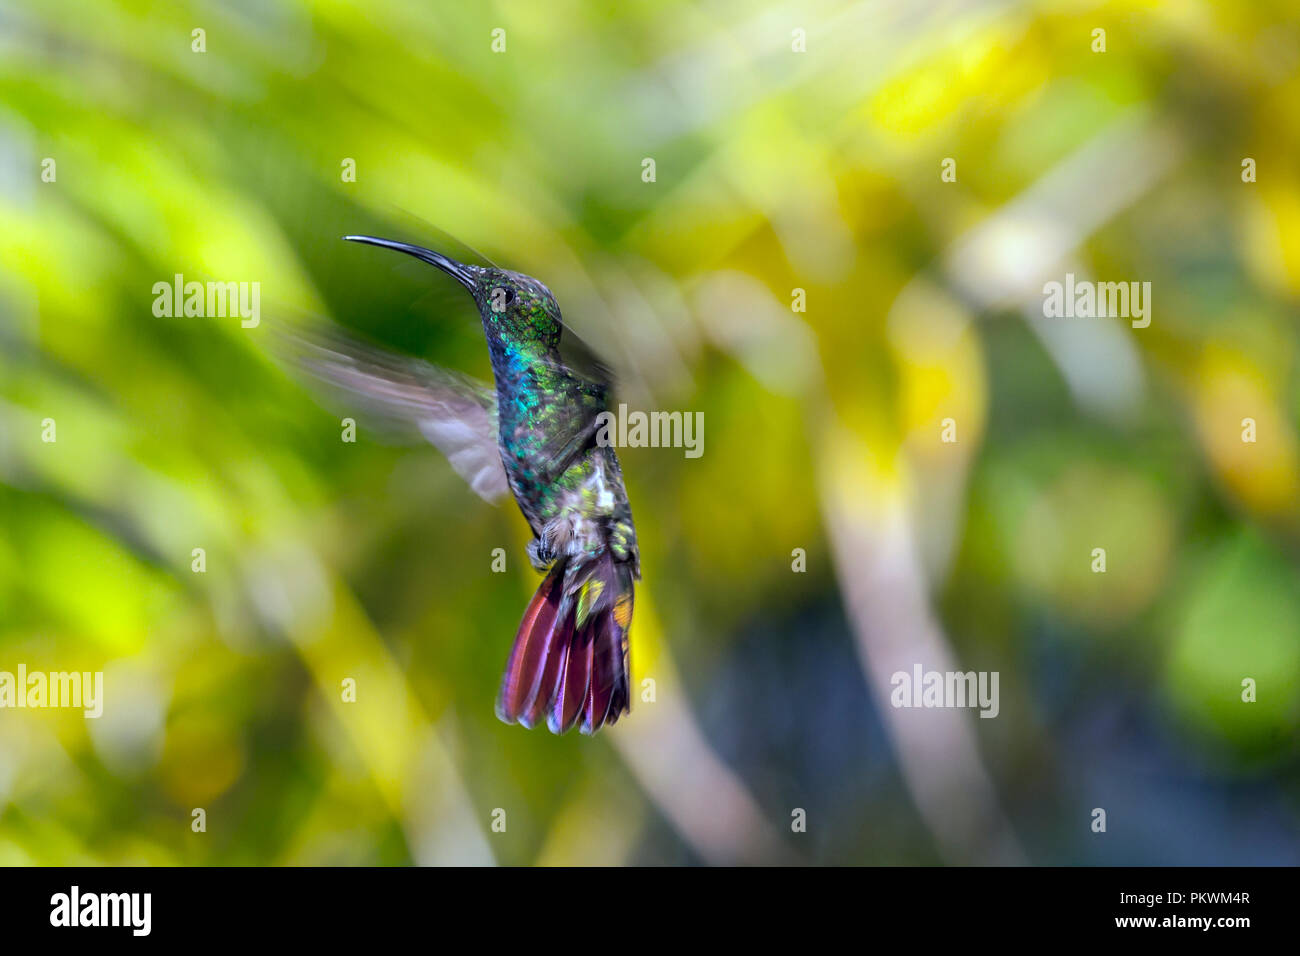 Emerald-chinned Hummingbirds ,Abeillia abeillei also known as Abeille's Hummingbirds - Stock Photo